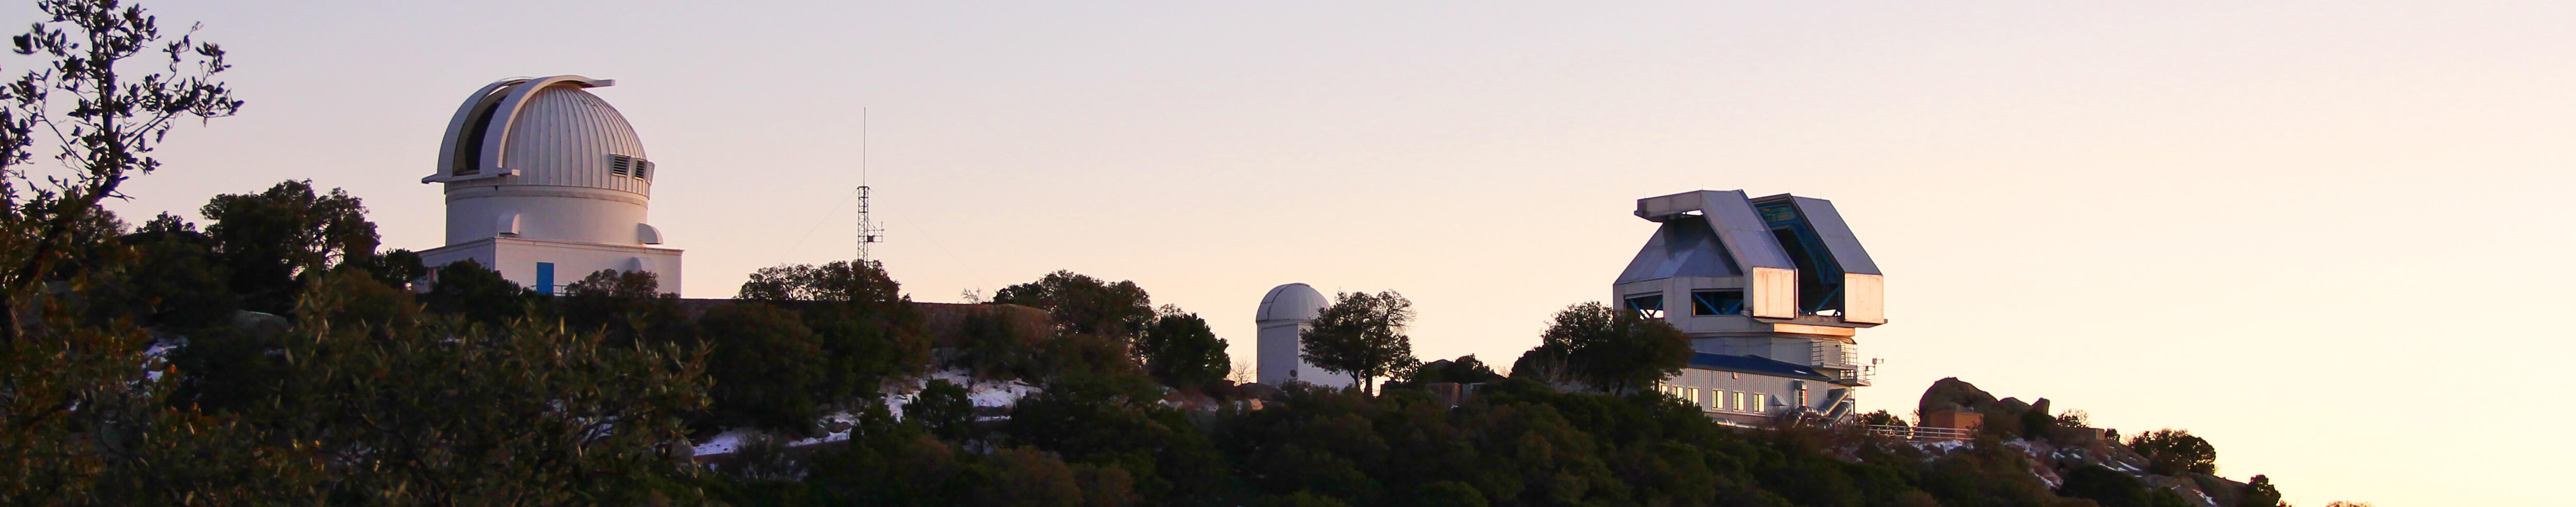 The WIYN 0.9-meter and 3.5-meter telescopes at dusk, Kitt Peak National Observatory.
Credit: P. Marenfeld & NOIRLab/NSF/AURA/